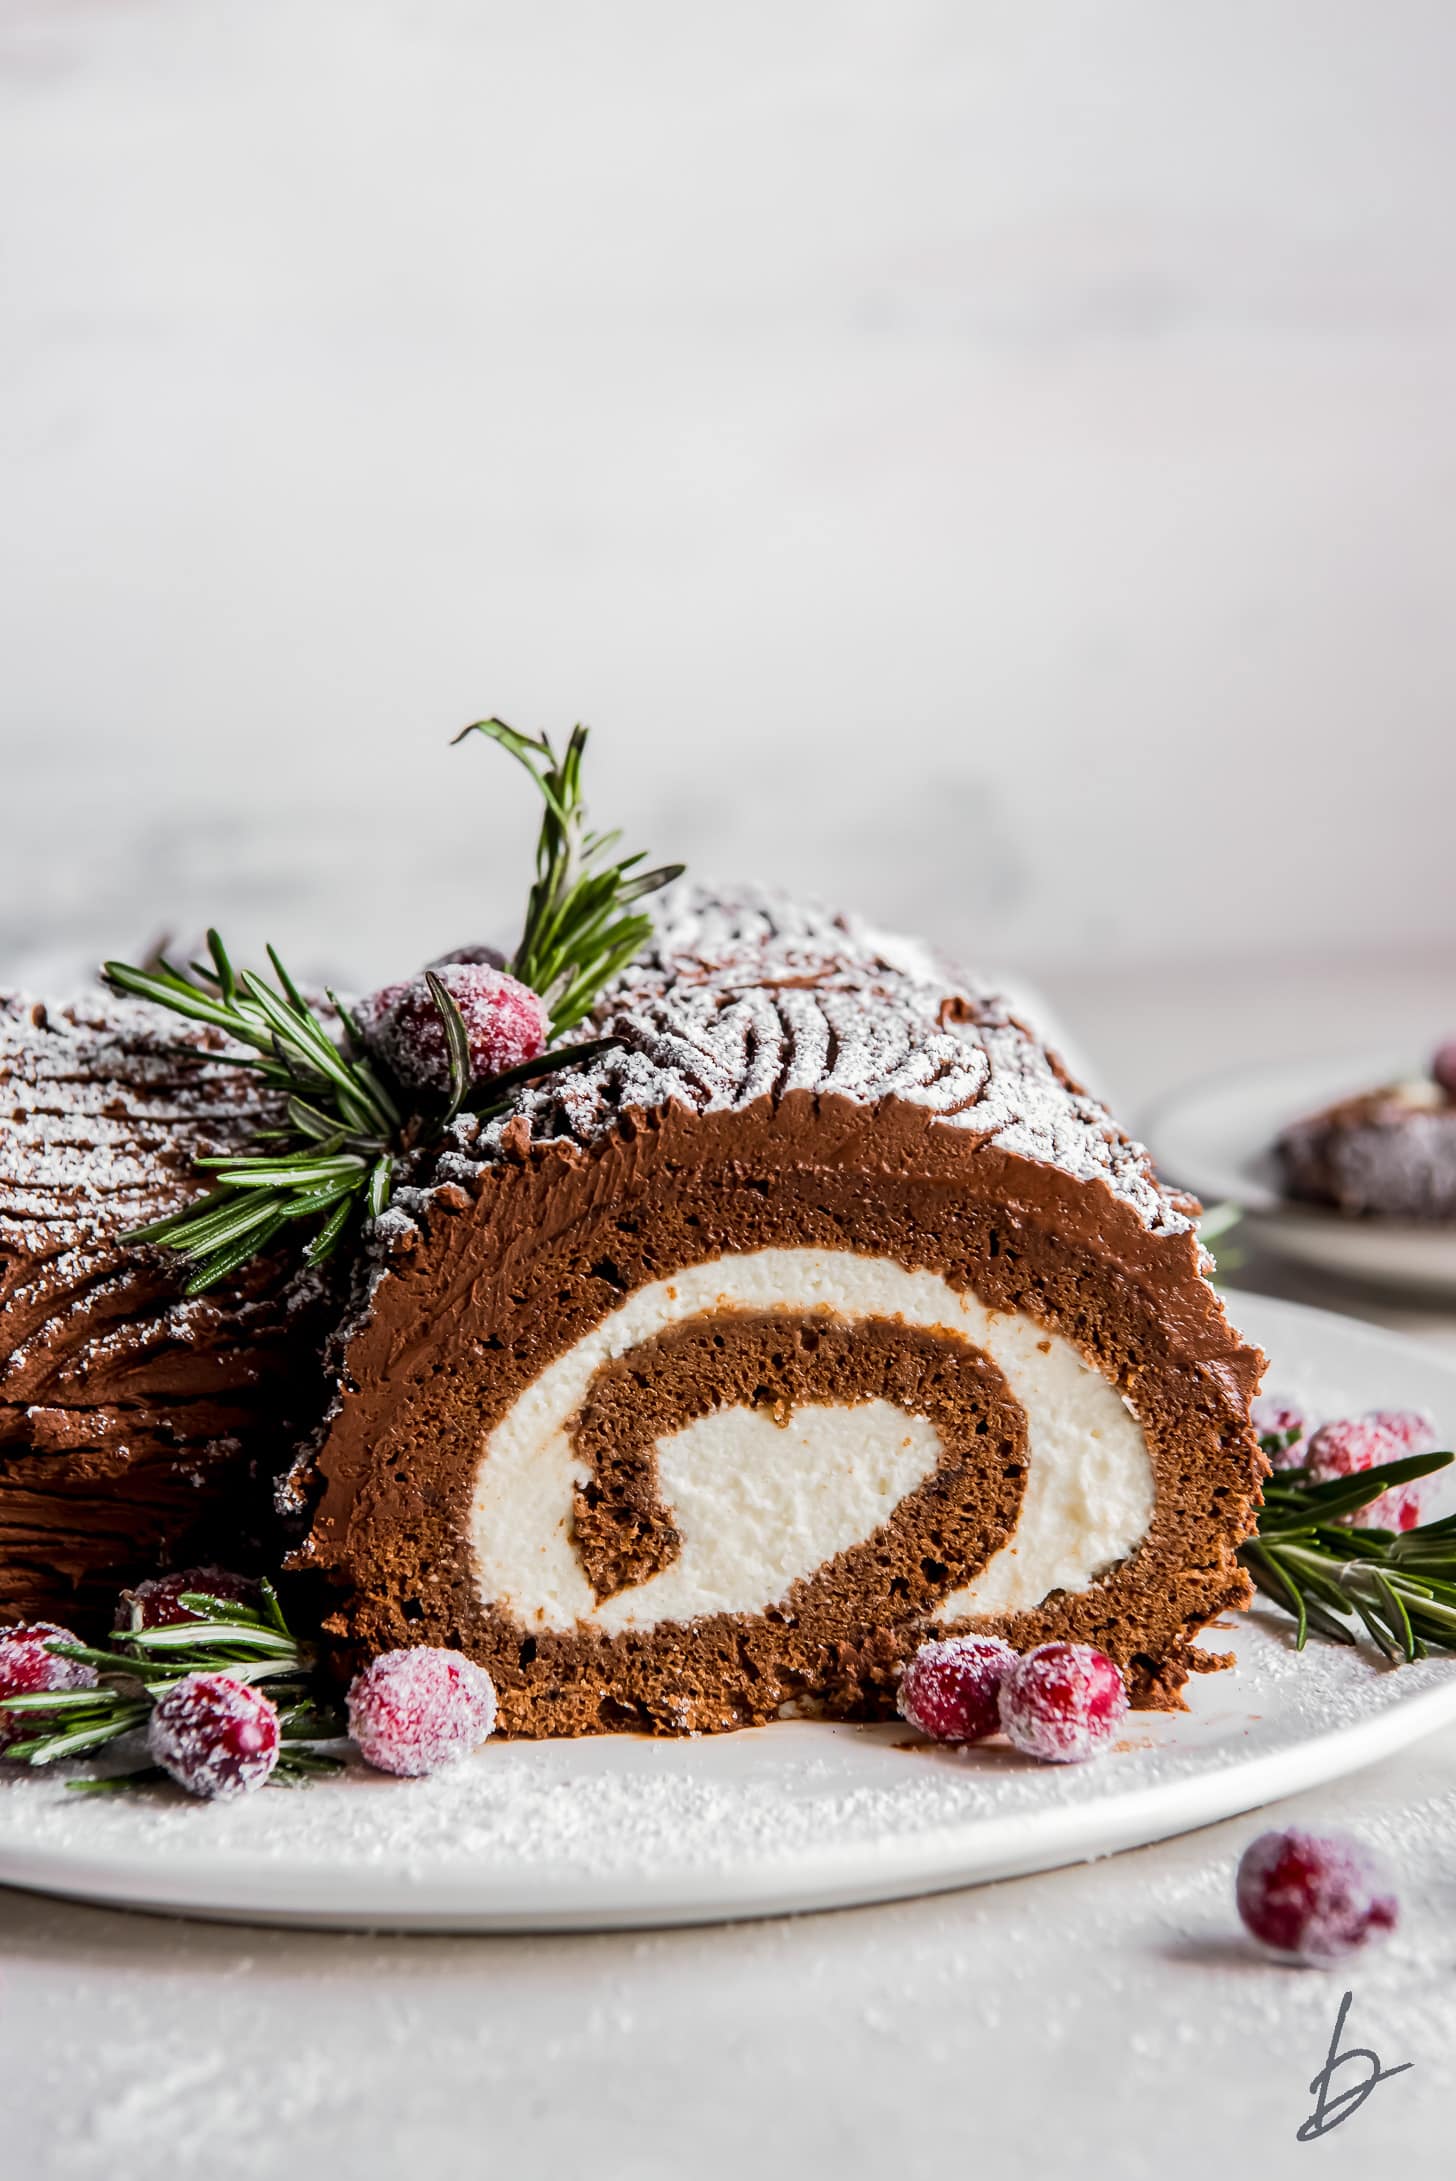 end of a yule log cake showing mascarpone filling swirl with chocolate cake.